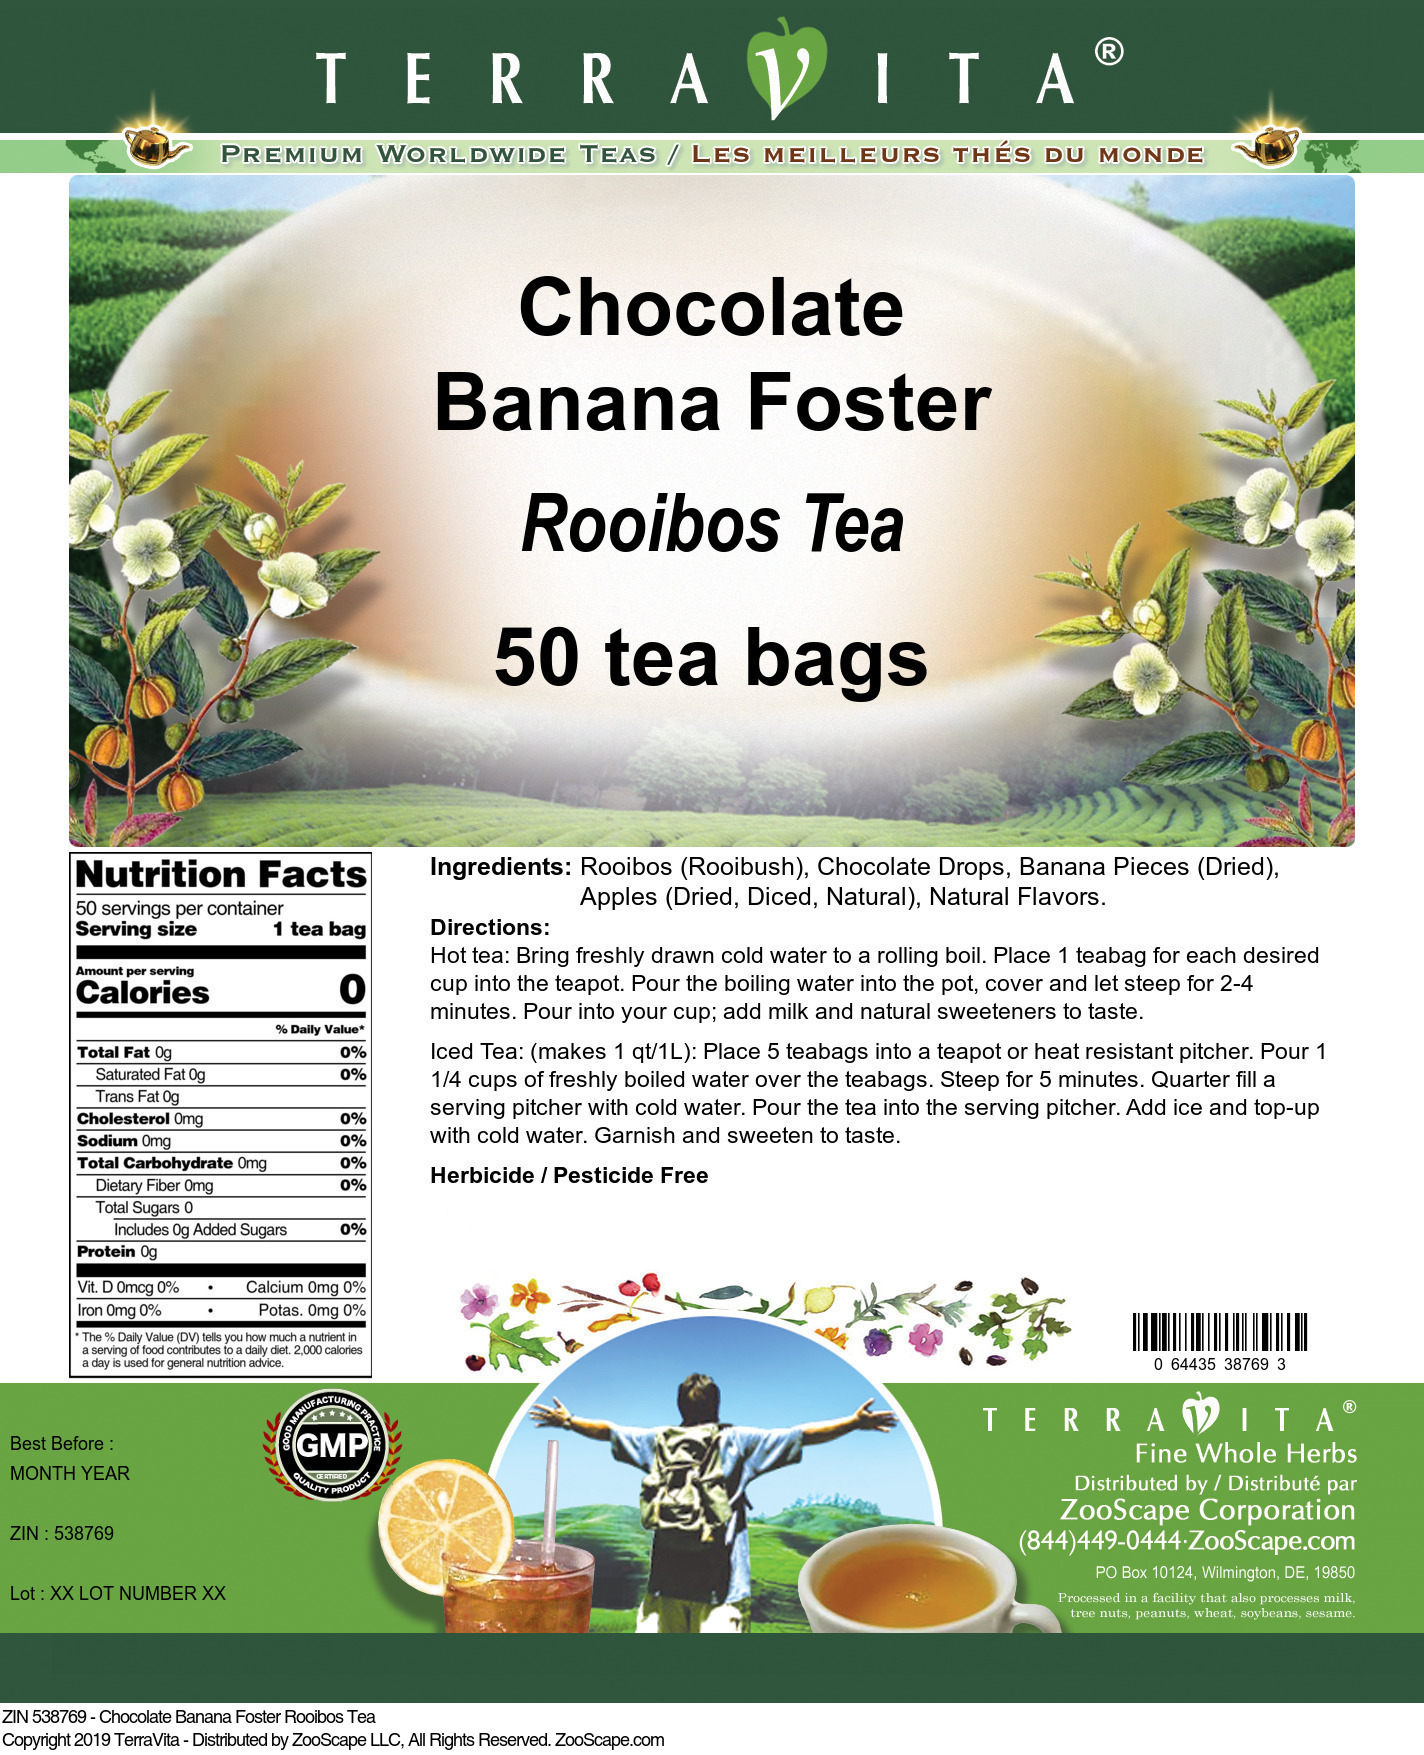 Chocolate Banana Foster Rooibos Tea - Label